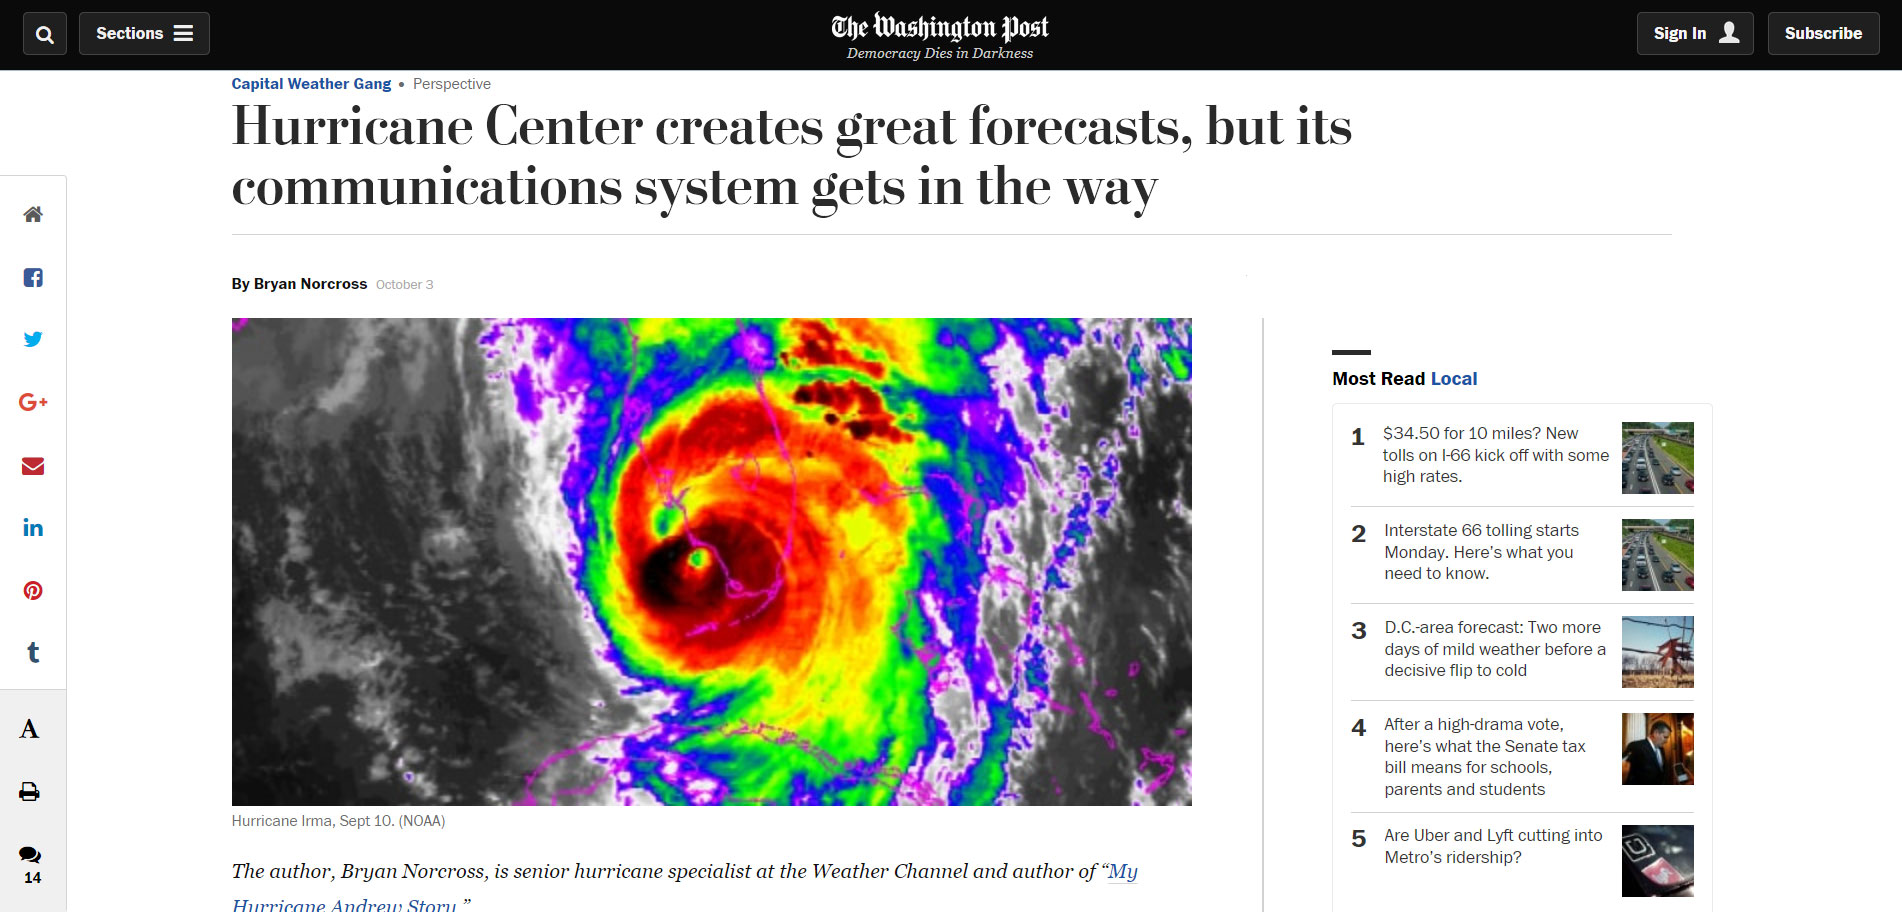 Hurricane Center creates great forecasts